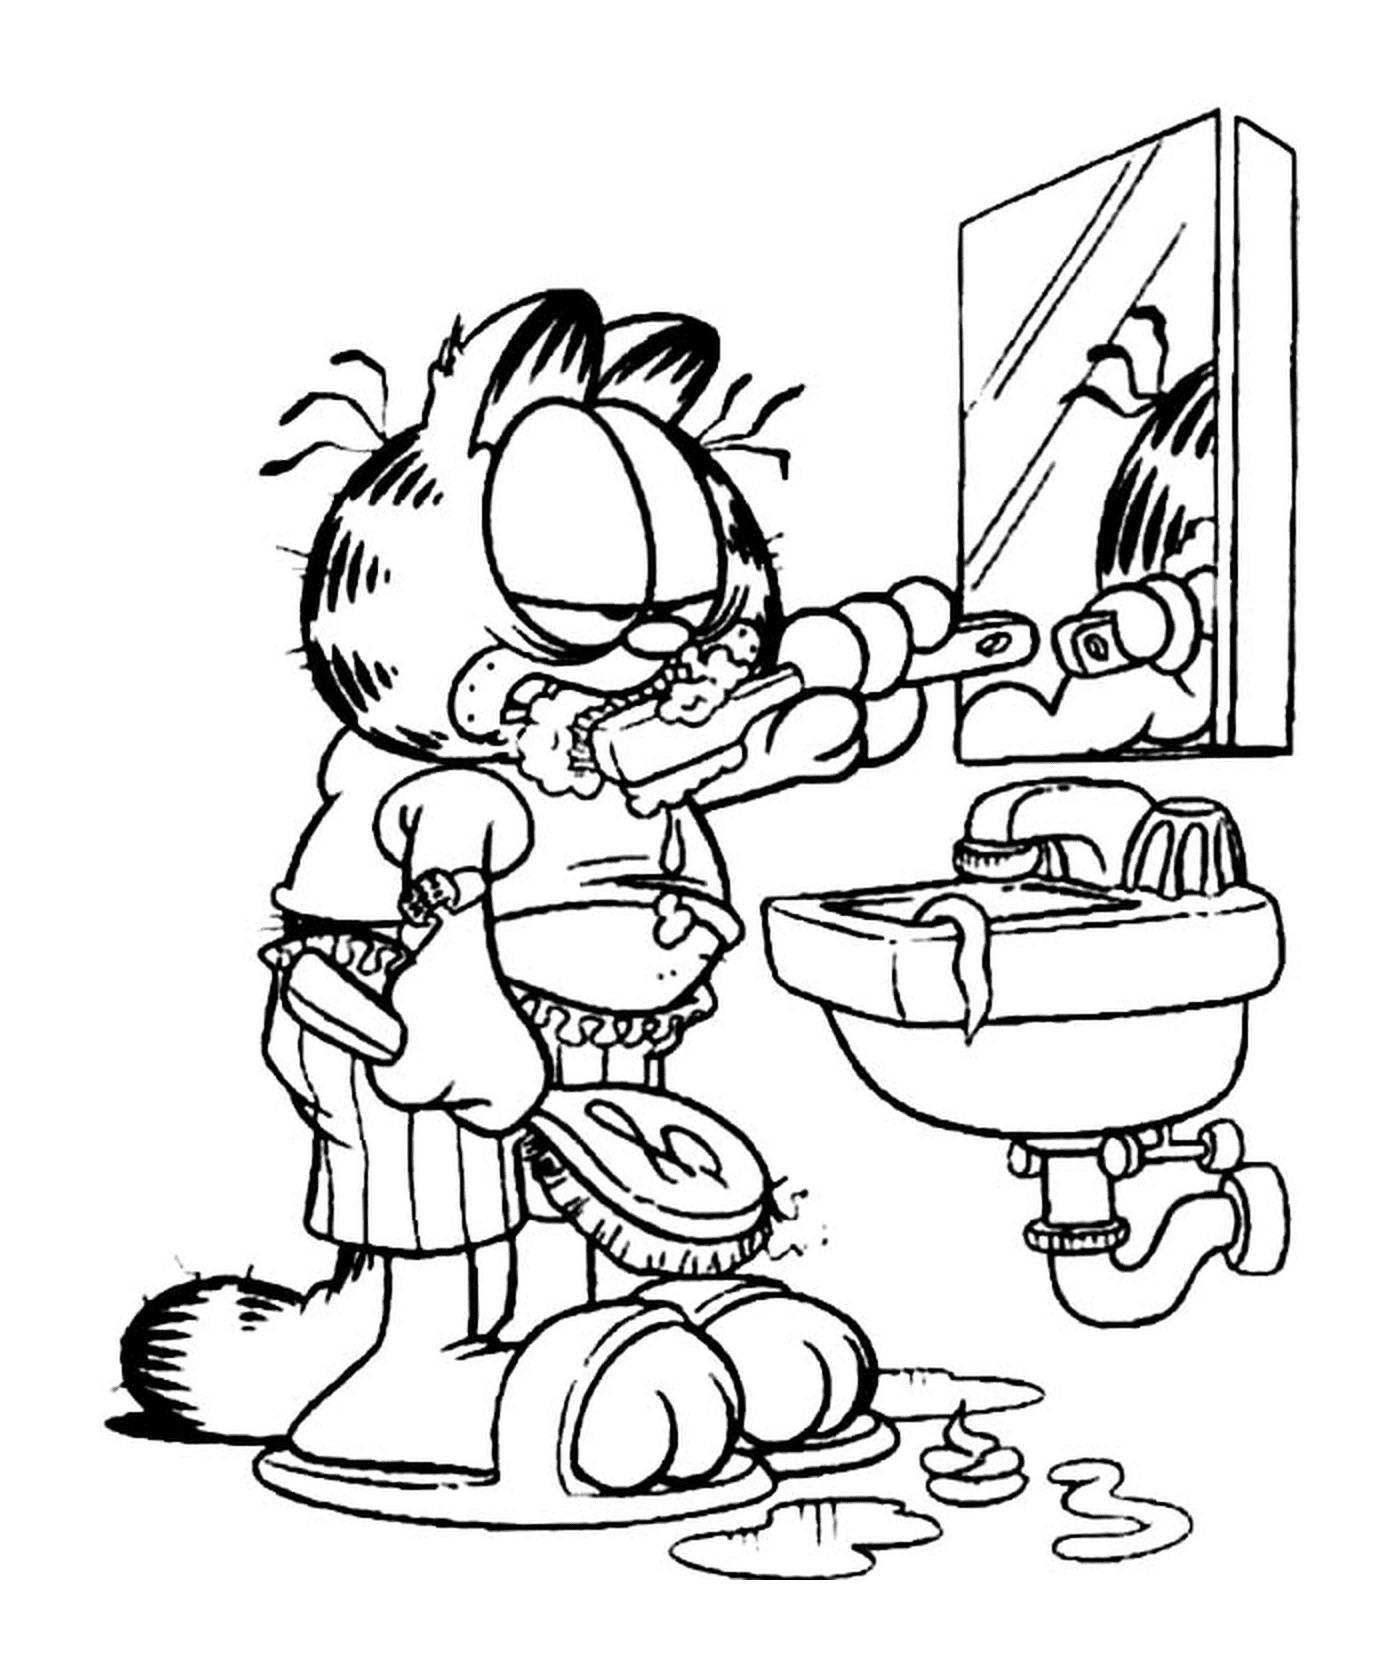   Garfield se brosse les dents 